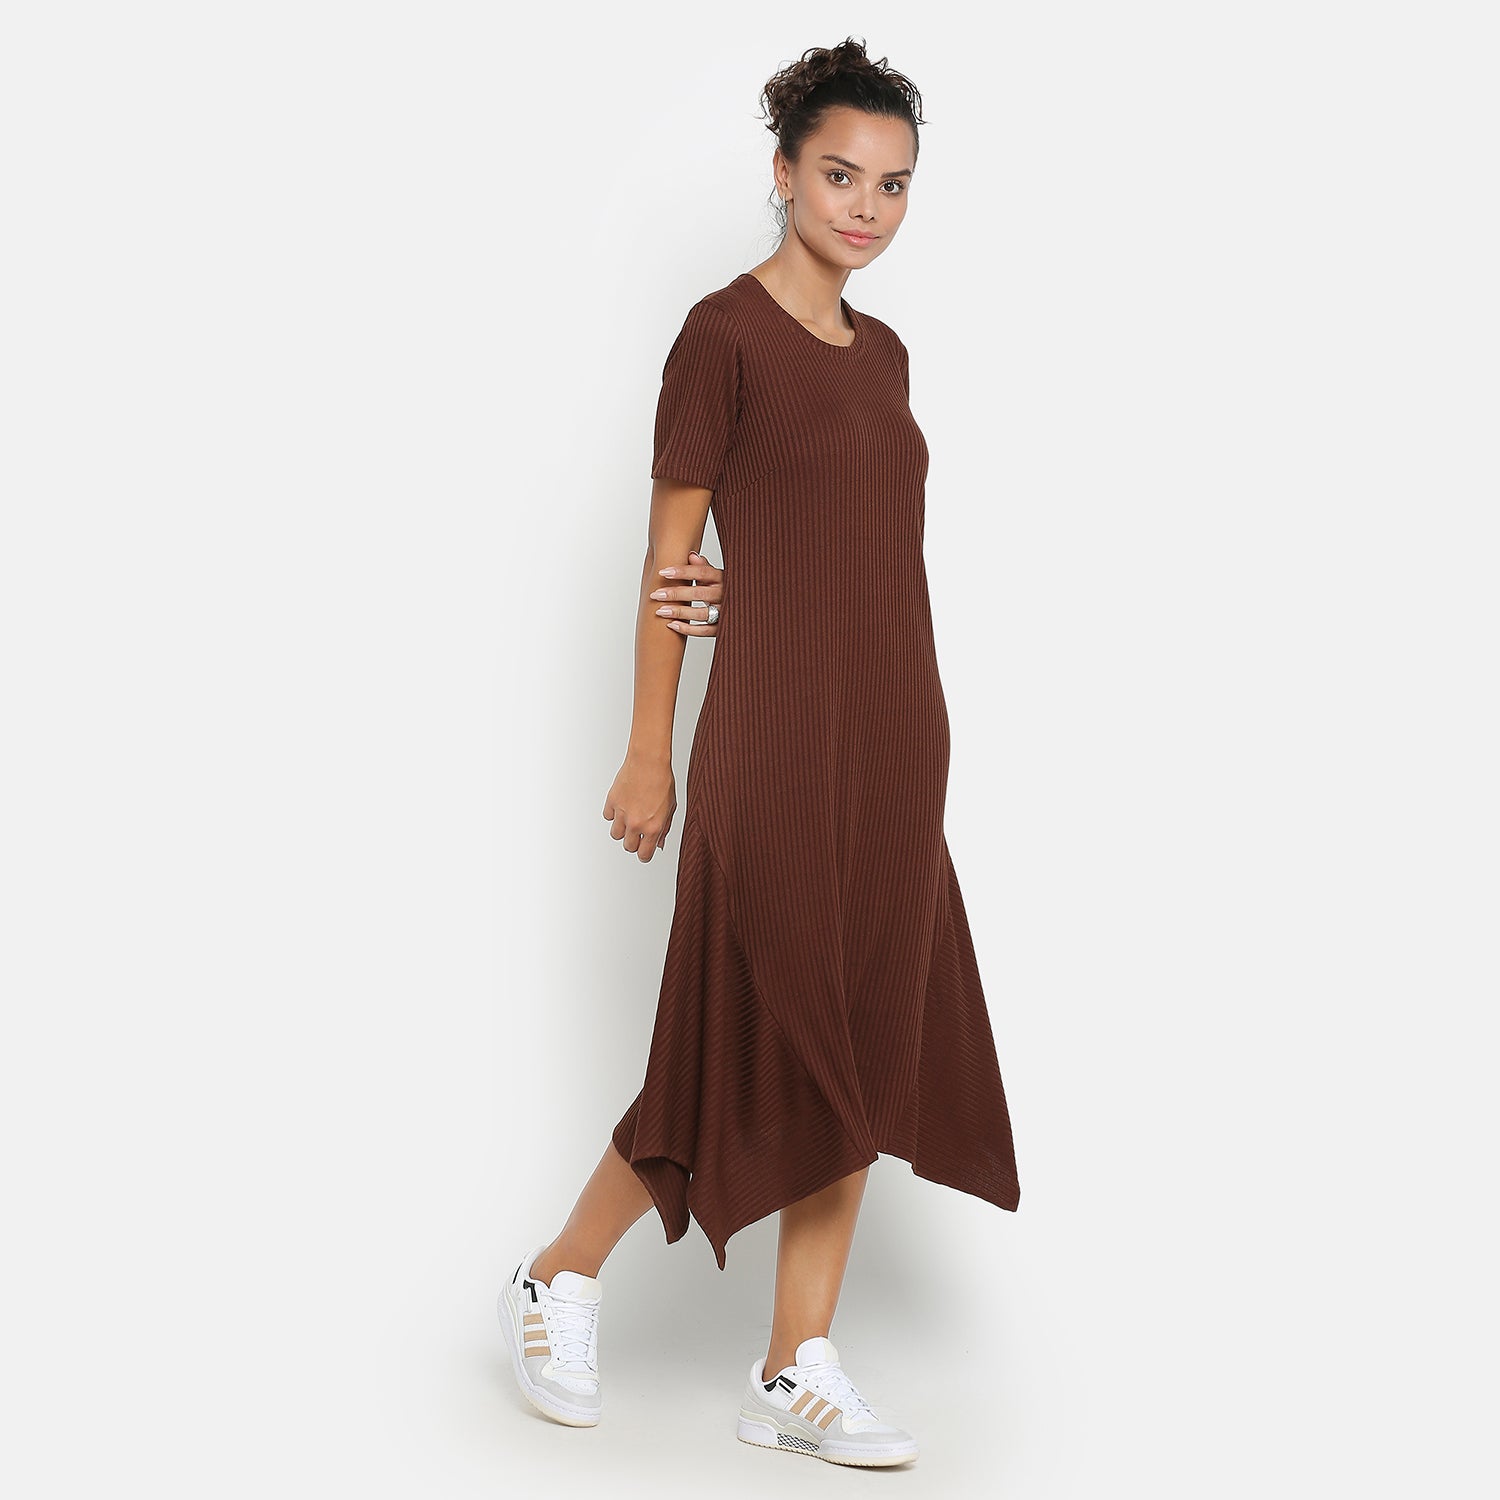 Brown ribbed asymmetrical dress